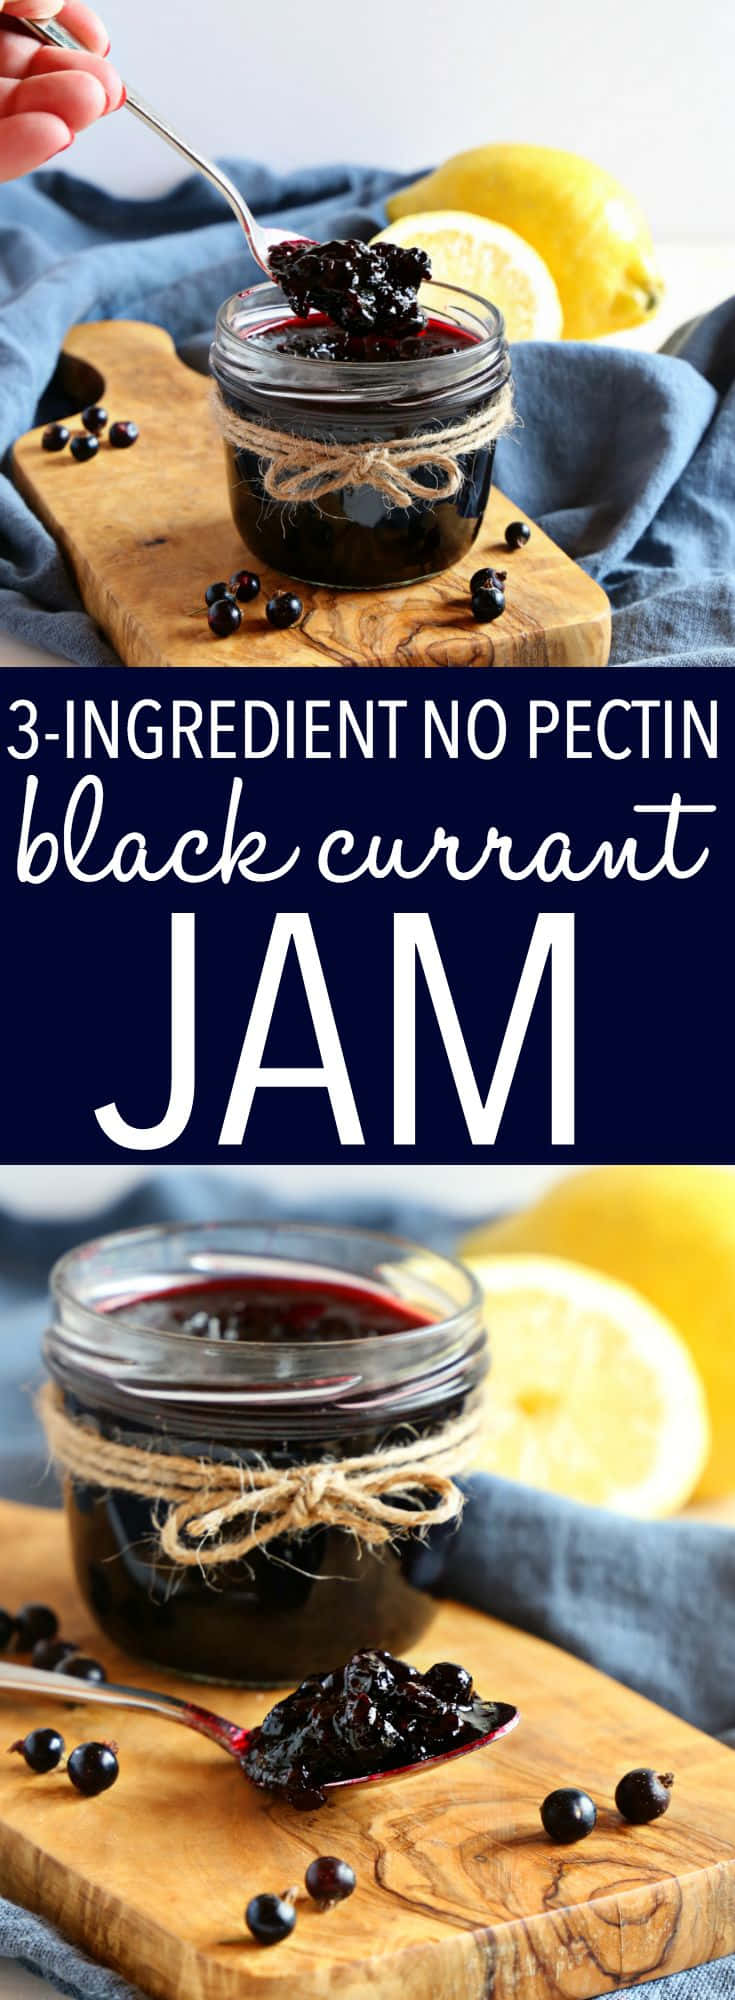 Black Currant - An antioxidant rich berry Wallpaper